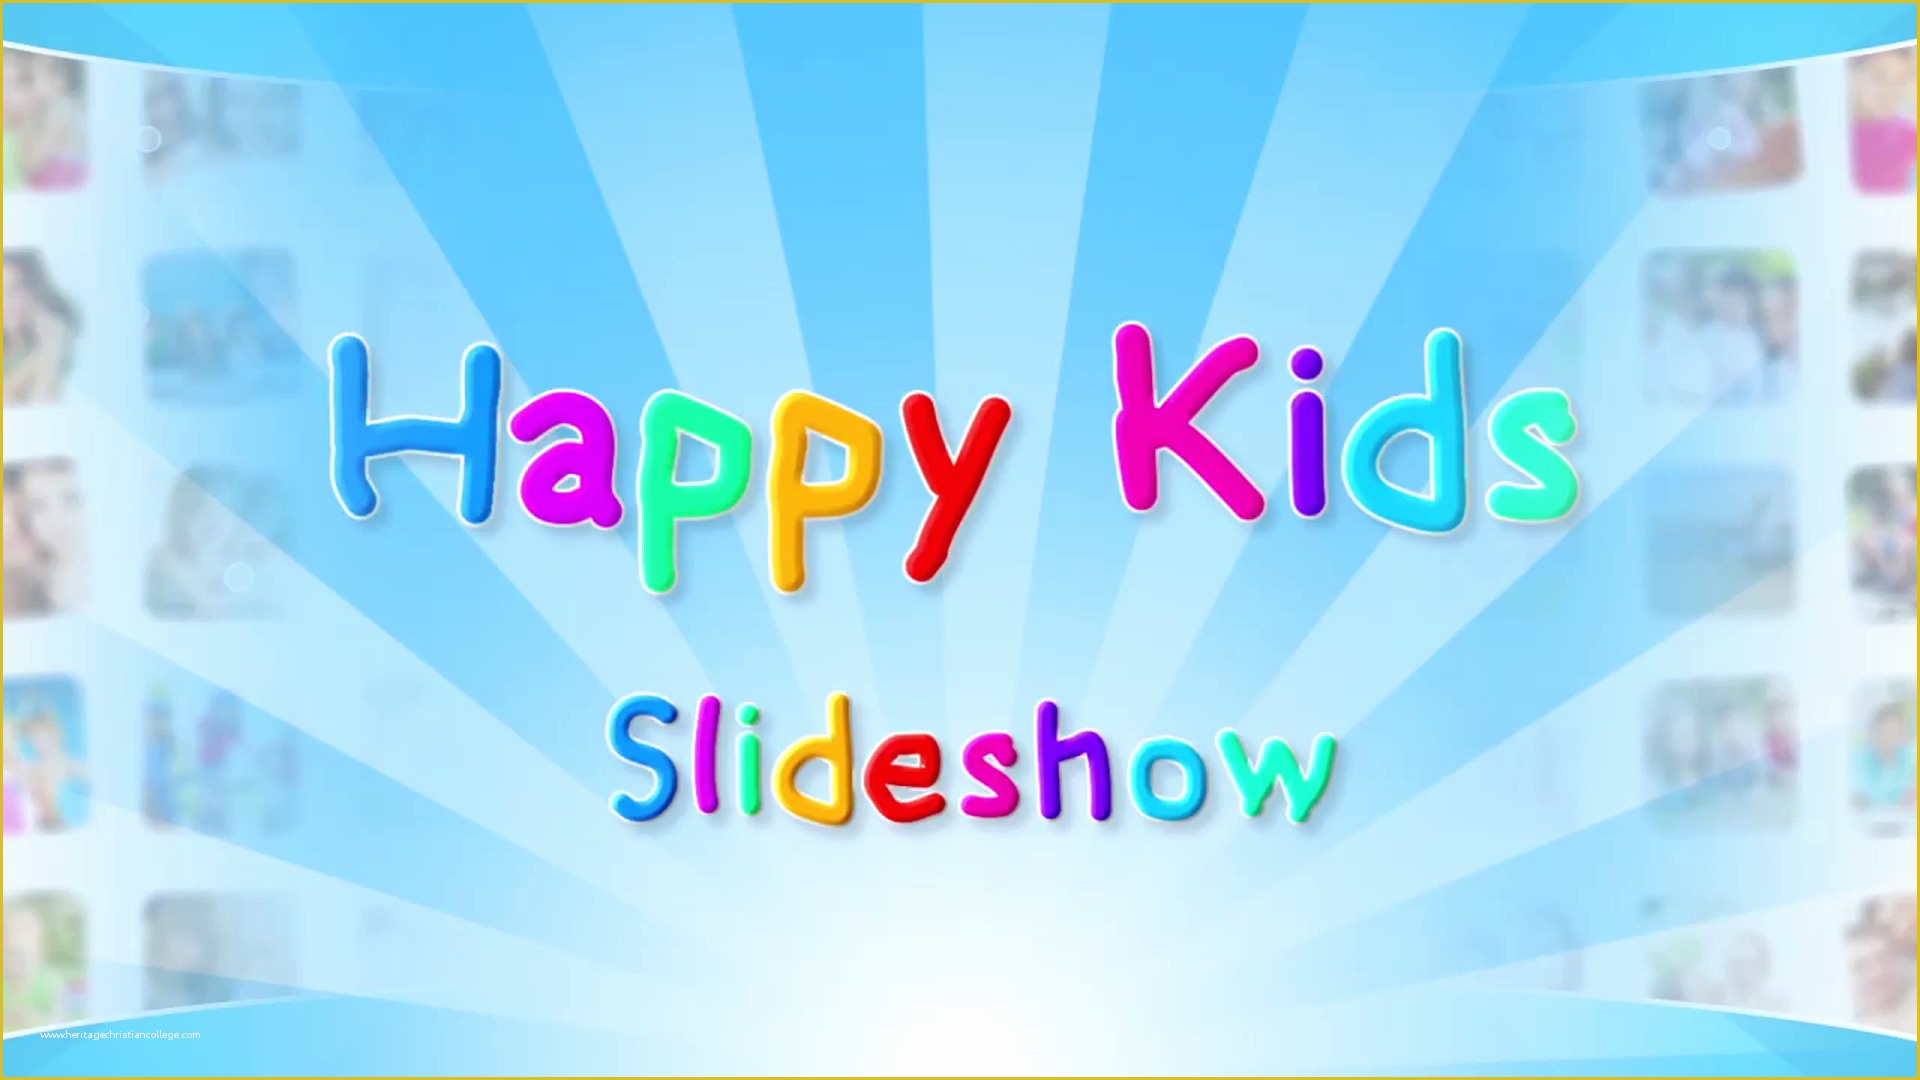 Final Cut Pro Photo Slideshow Template Free Of Happy Kids Slideshow Apple Motion and Final Cut Pro X